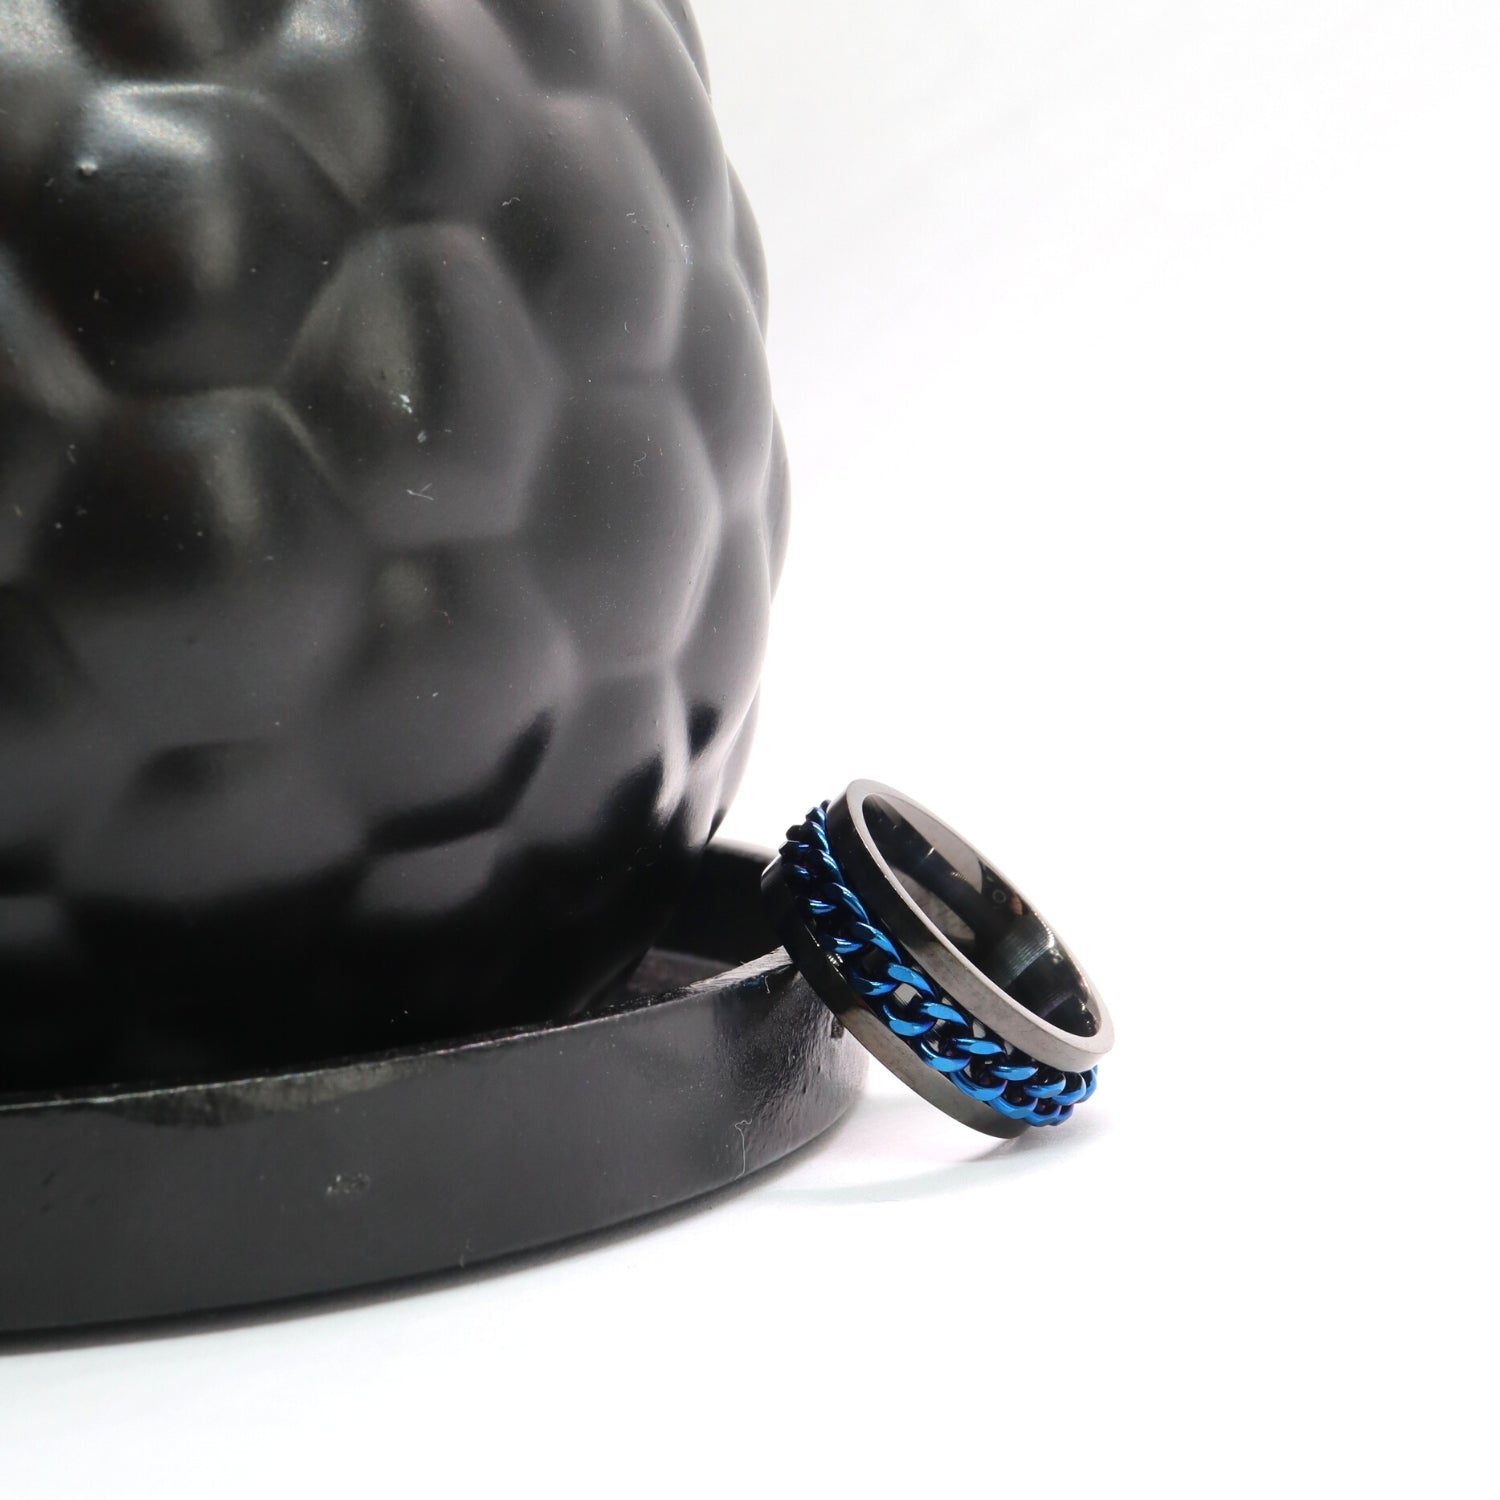 Anxiety Ring (Kettinkje) Blauwe ketting Zwarte ring Sfeerbeeld